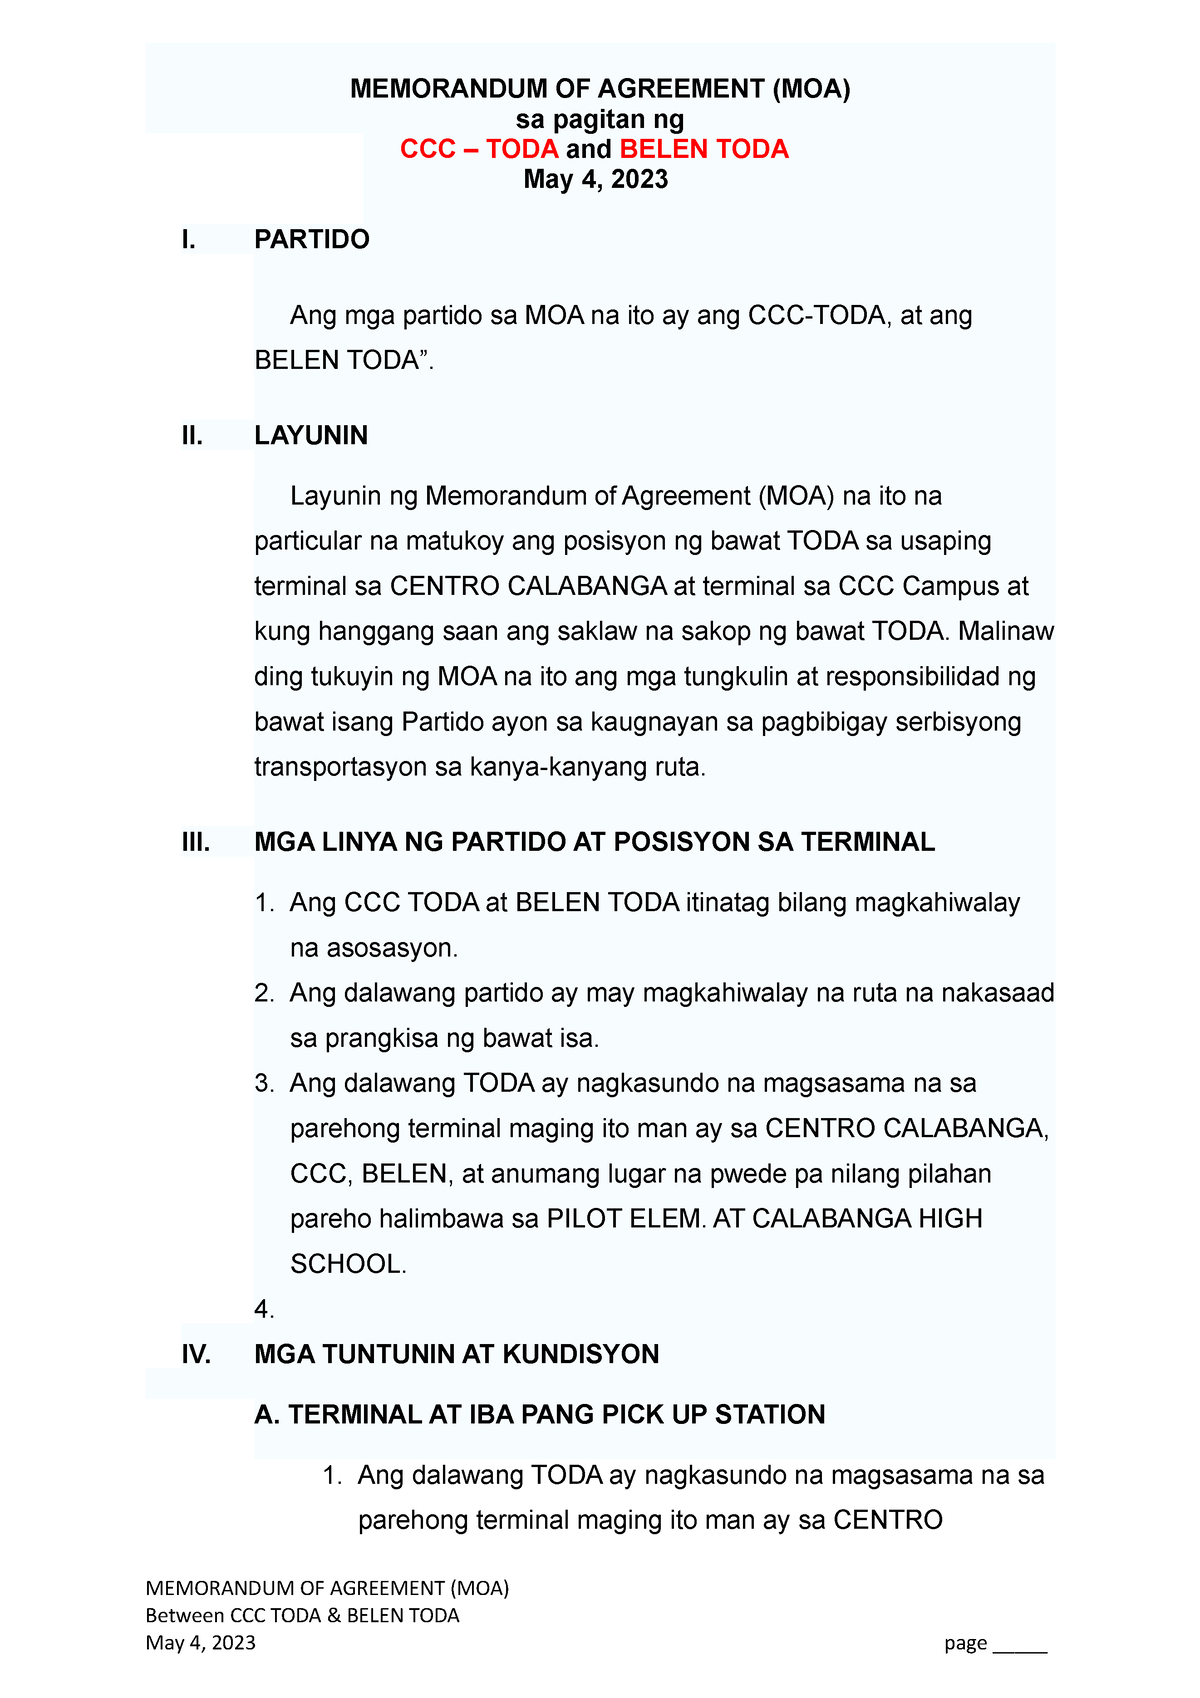 Memorandum Of Agreement Memorandum Of Agreement Moa Sa Pagitan Ng Ccc Toda And Belen Toda 9069